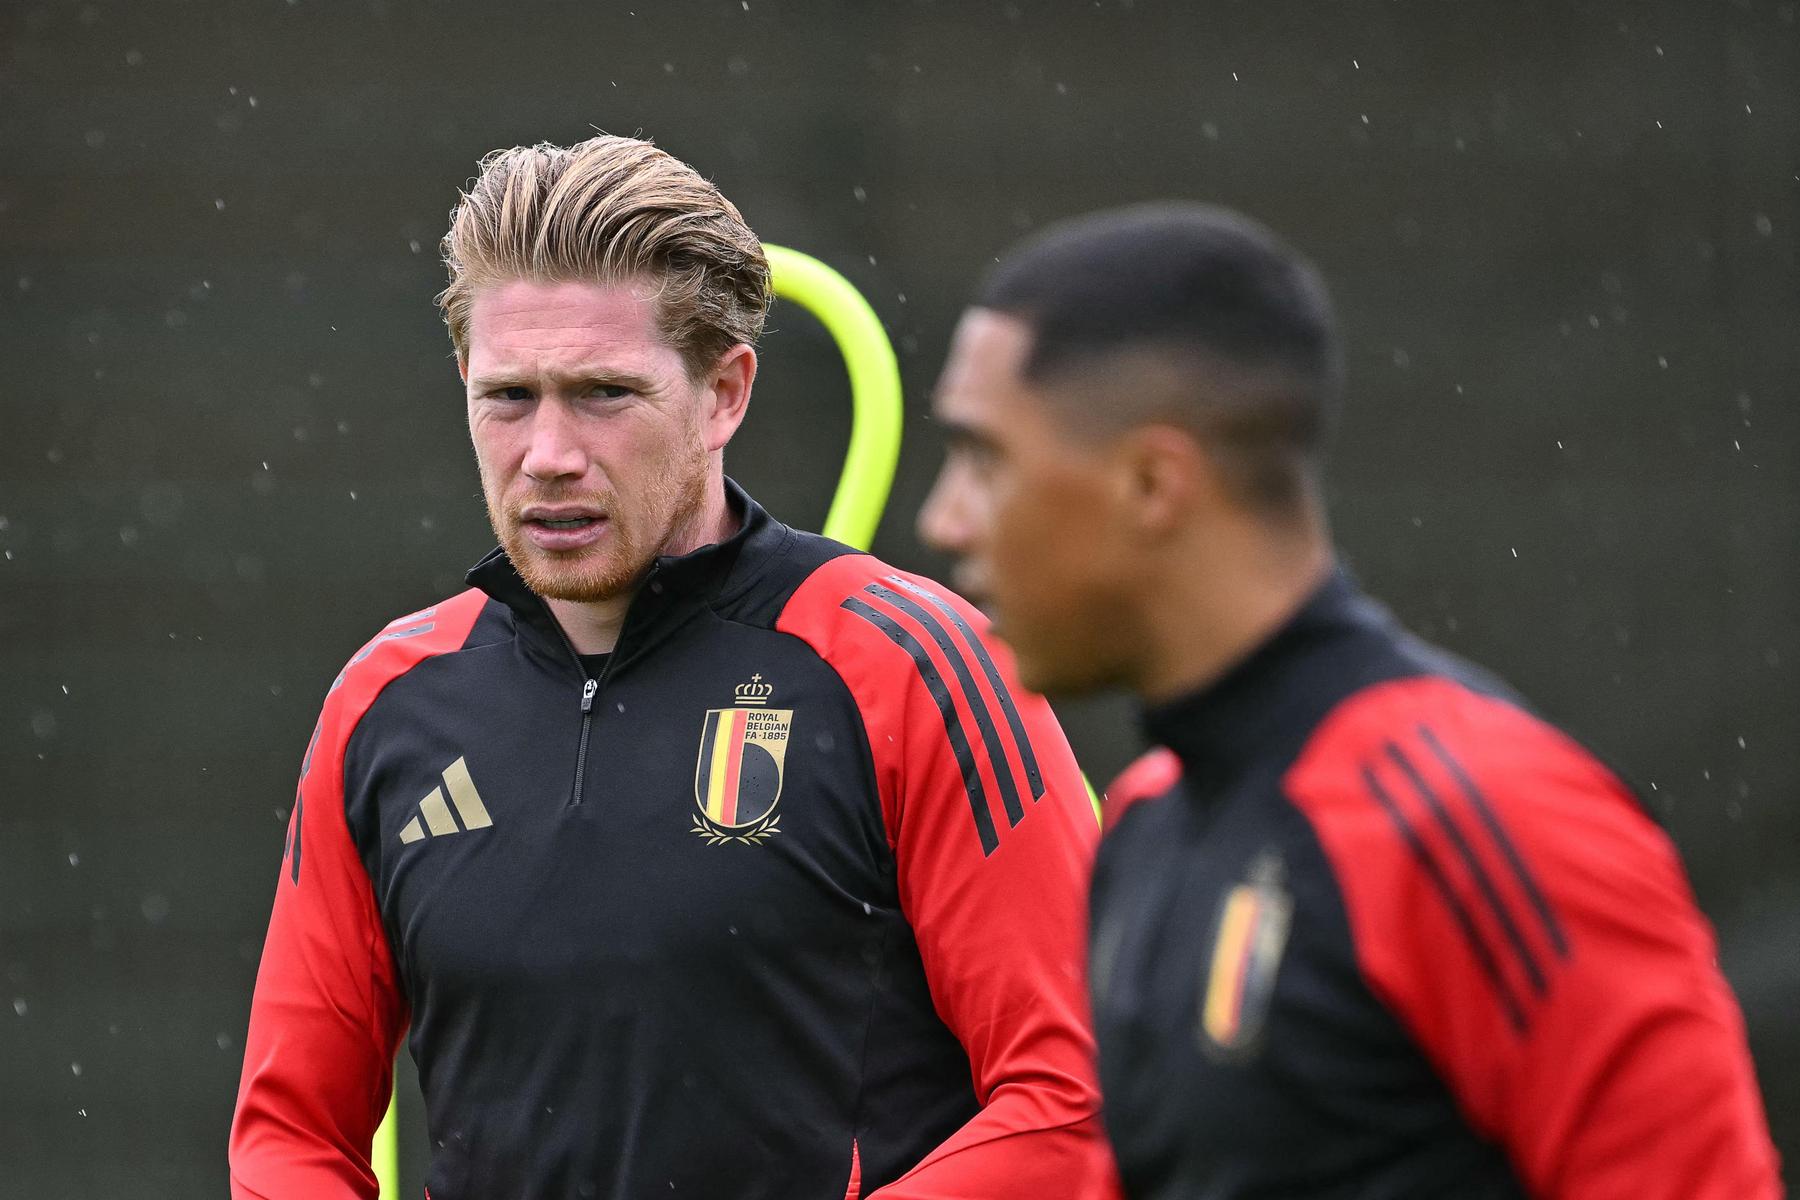 Social Media: Belgisches Team während EM am häufigsten auf Social Media beleidigt